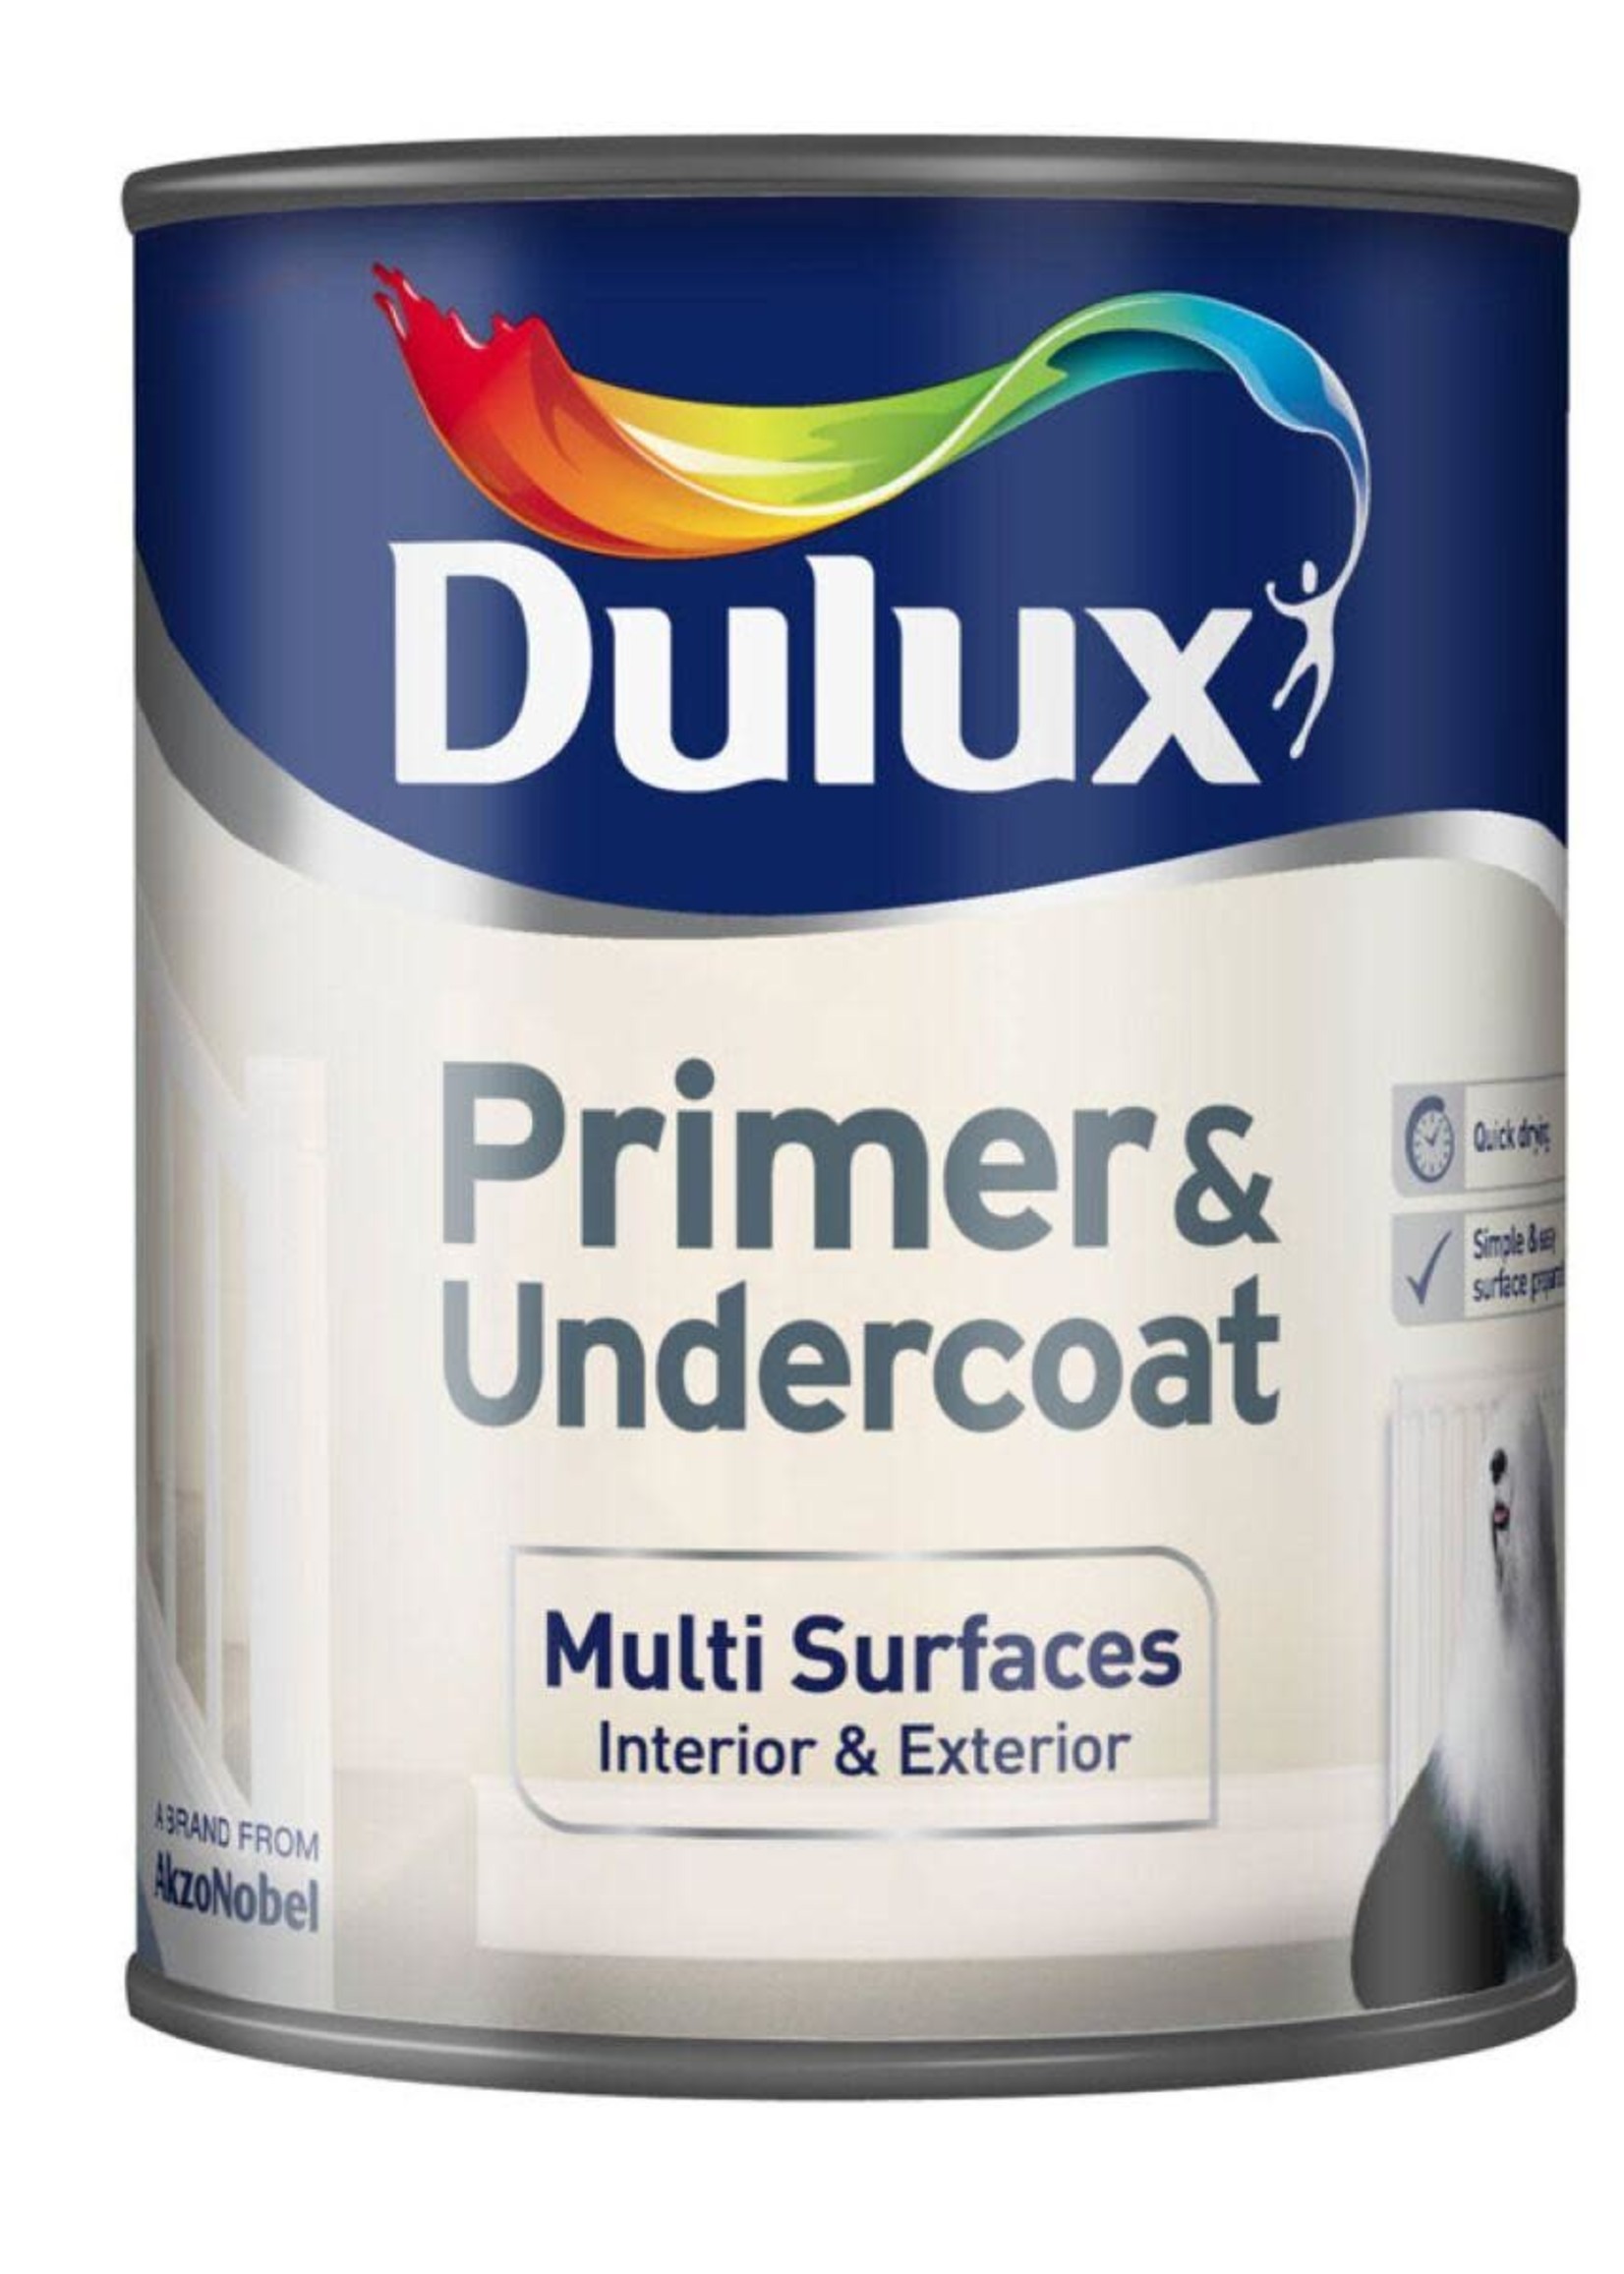 Dulux (Akzo Nobel) Dulux Multi Surface Primer and Undercoat 750ml